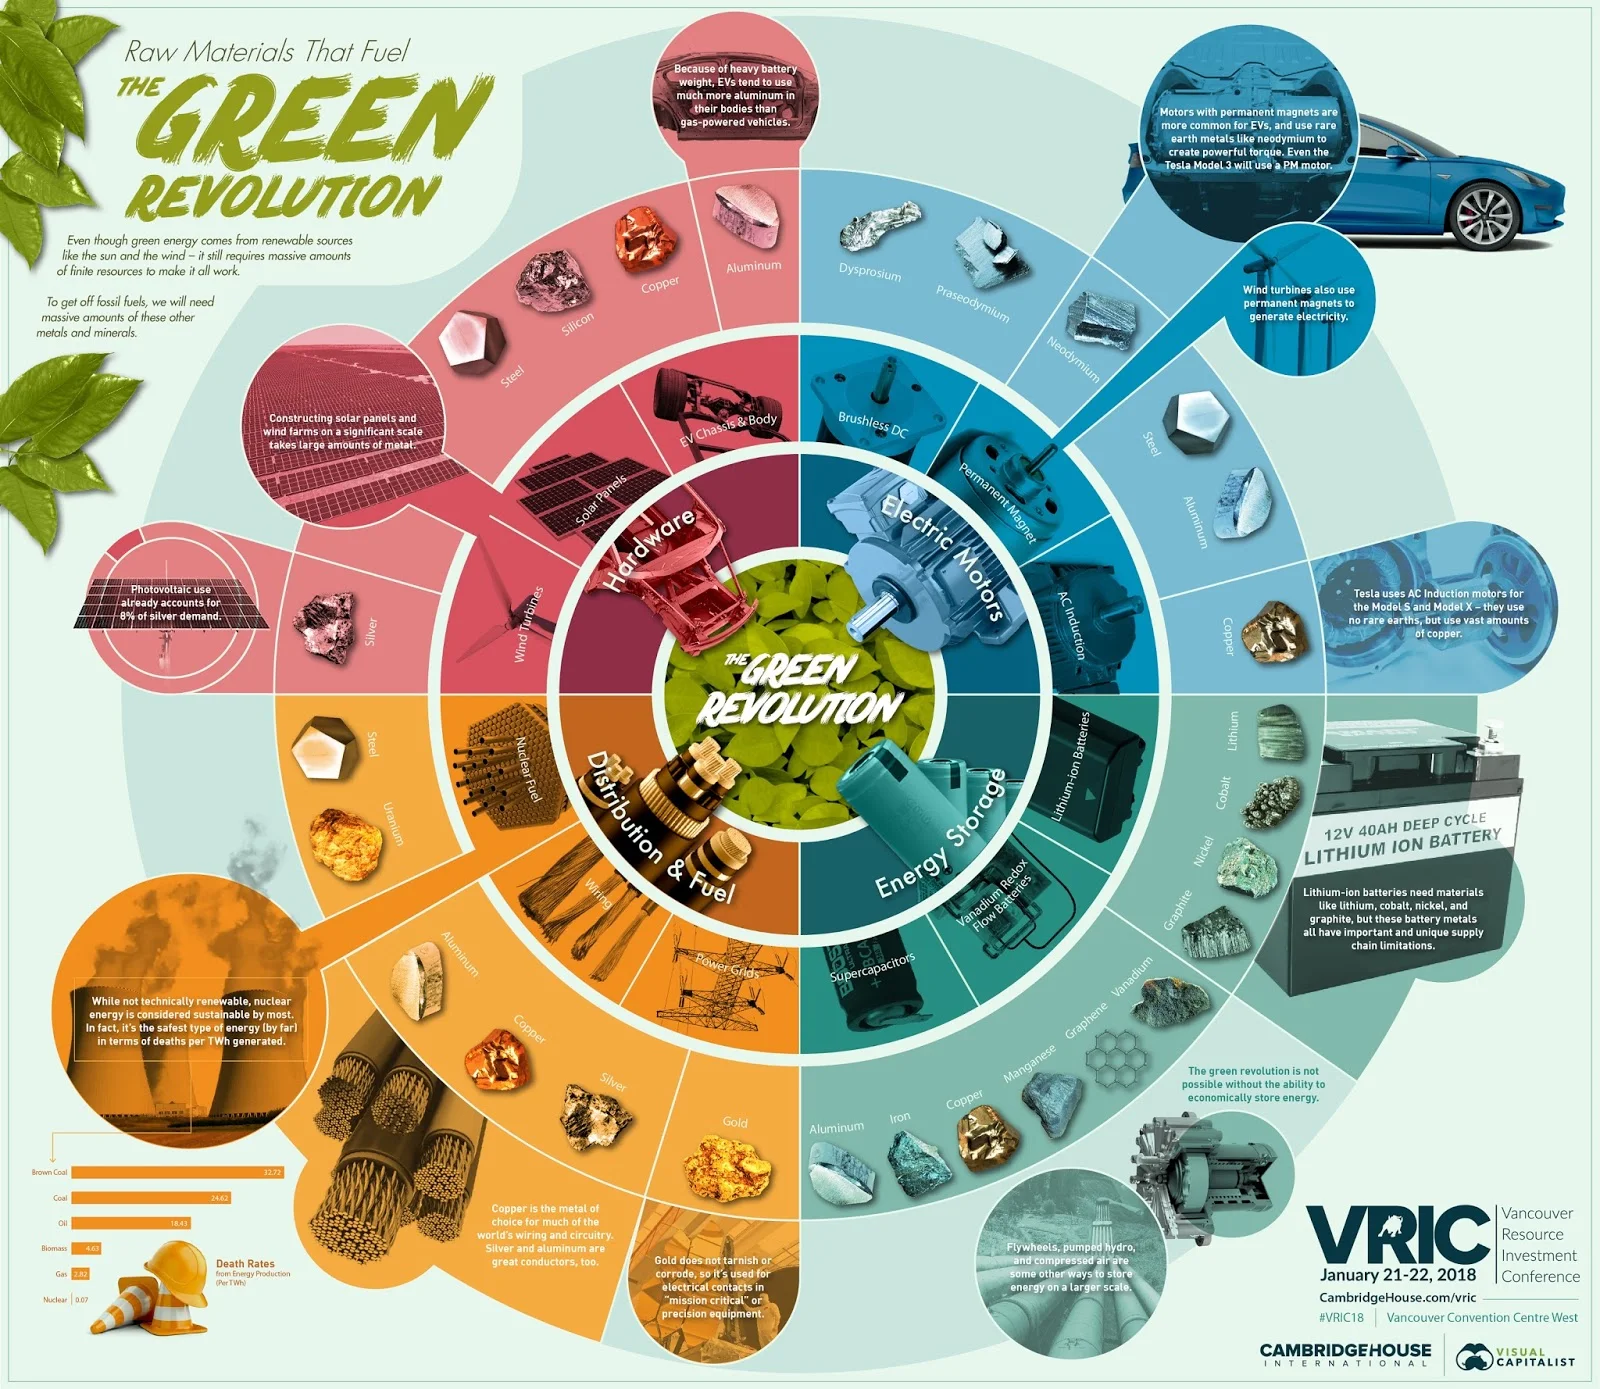 Materials that fuel the green revolution